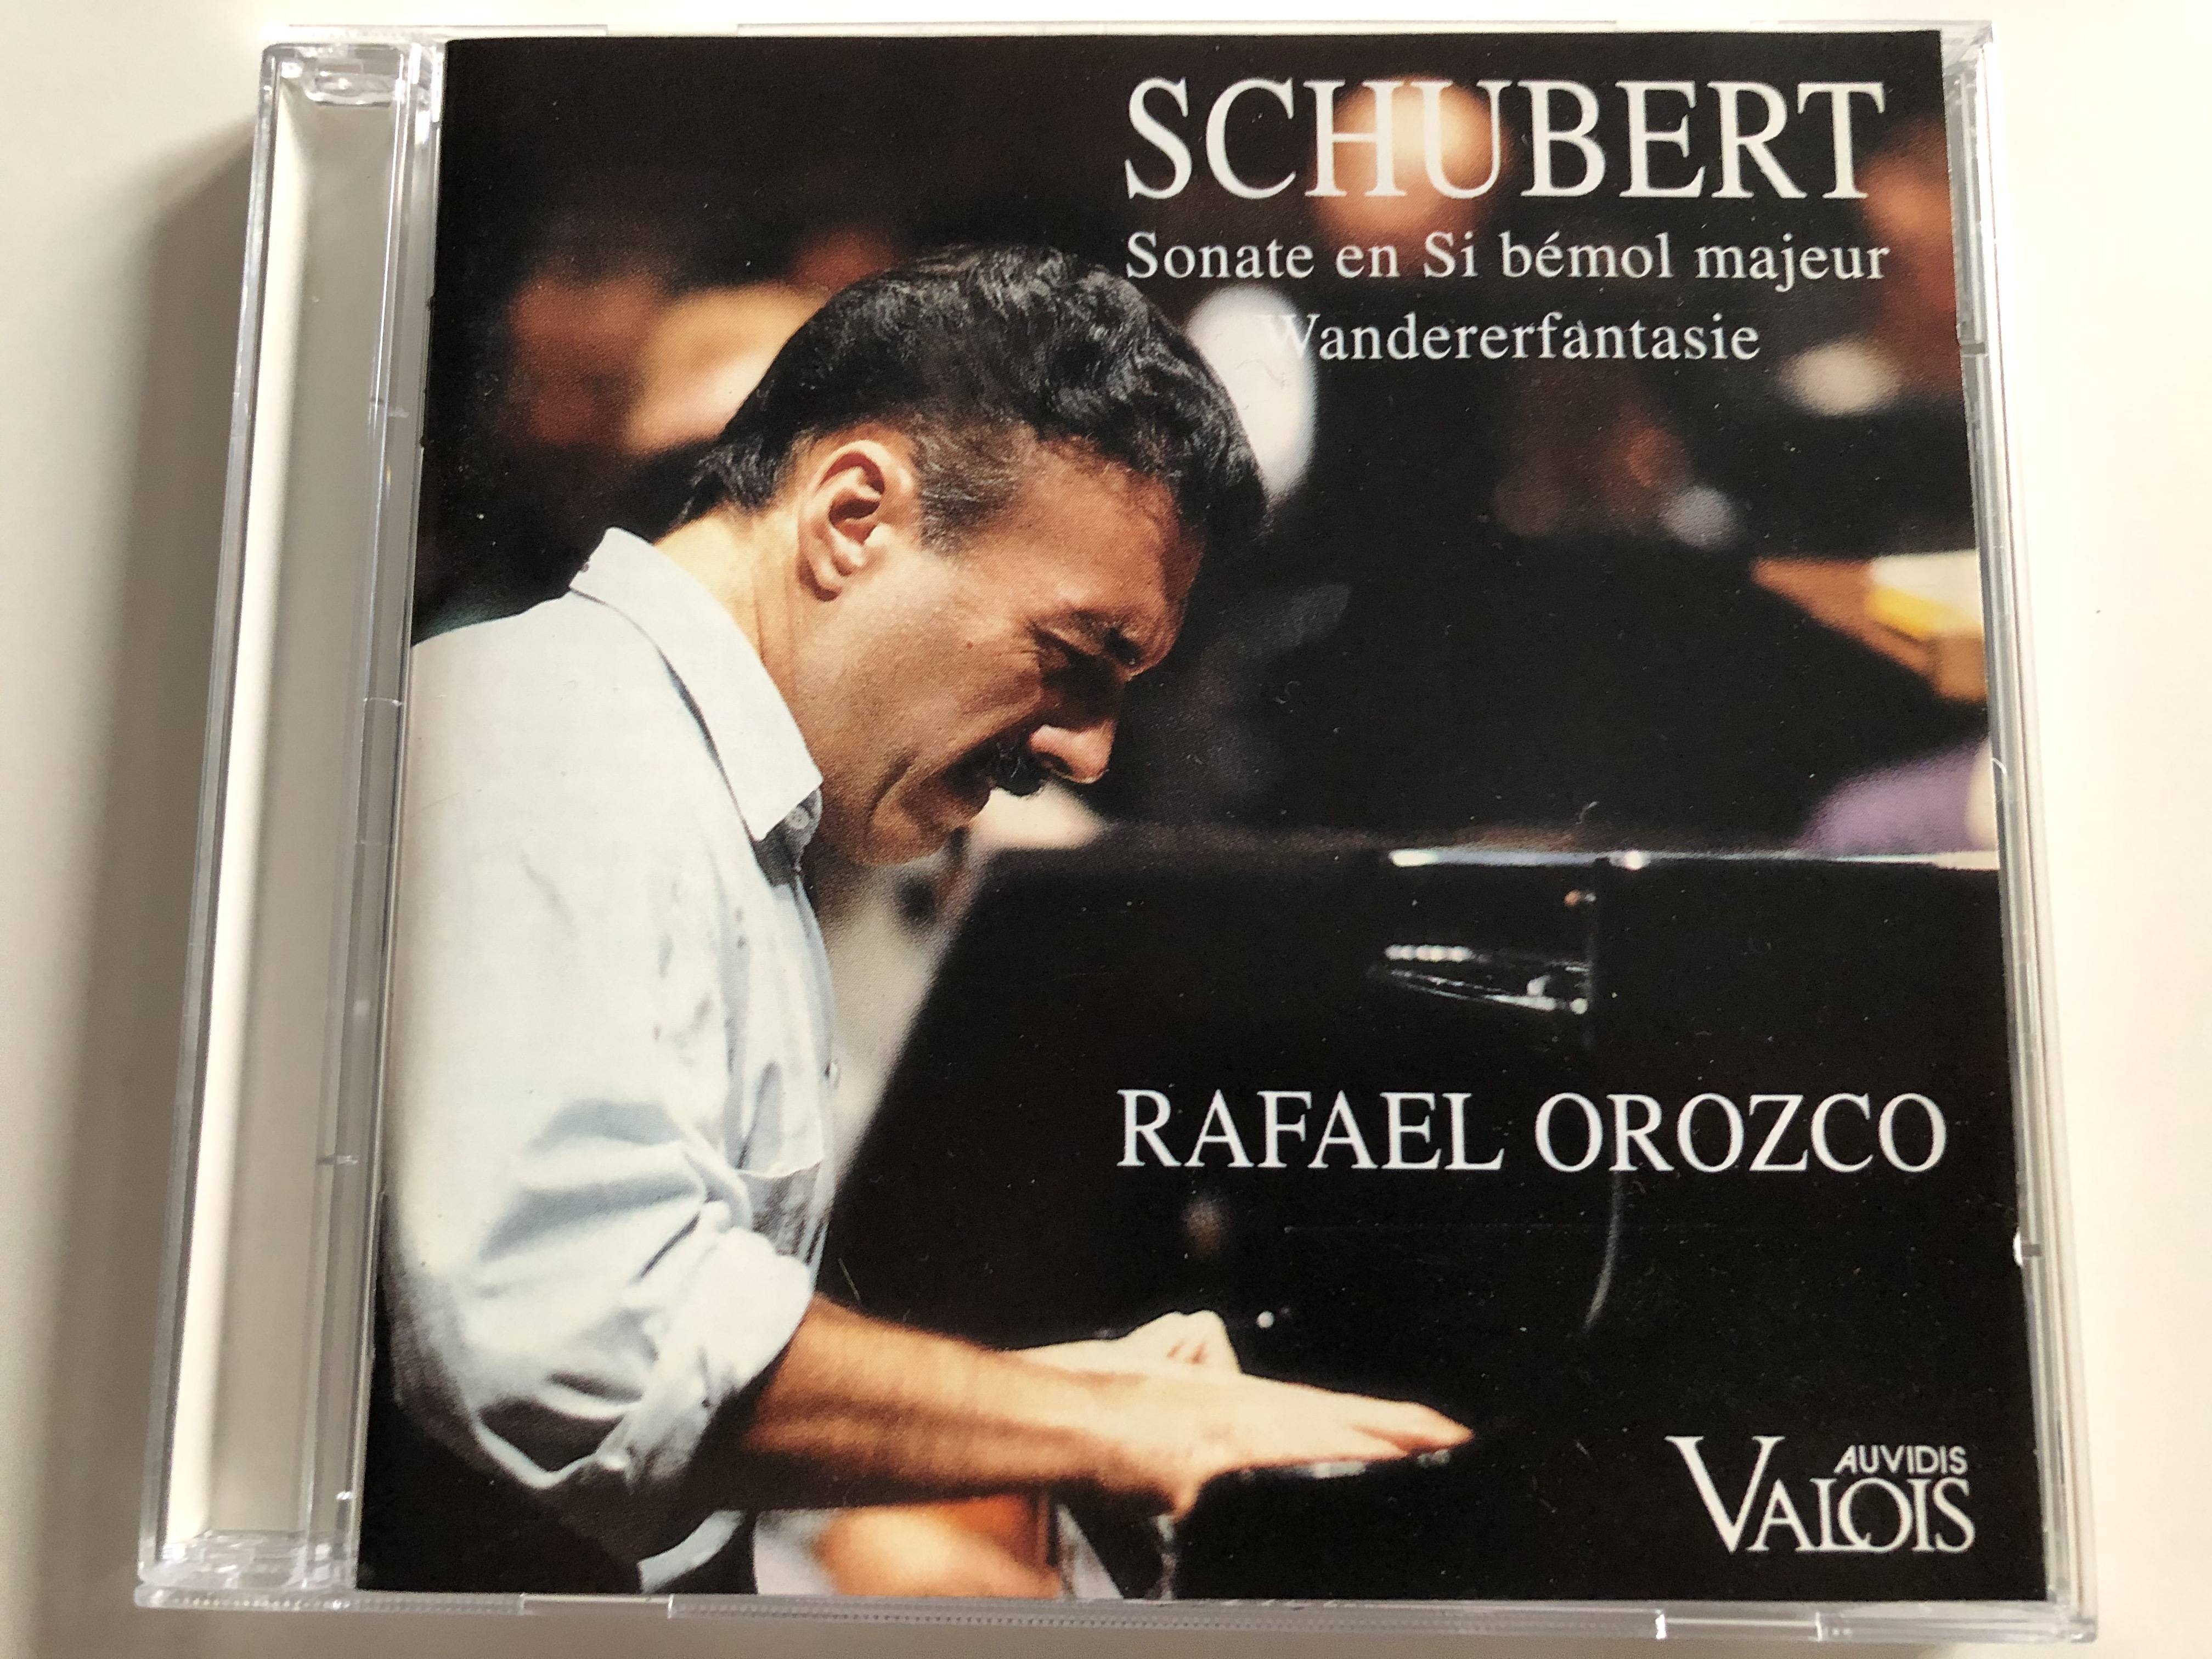 schubert-sonate-en-si-b-mol-majeur-wandererfantaisie-rafael-orozco-auvidis-france-audio-cd-1993-v-4683-1-.jpg